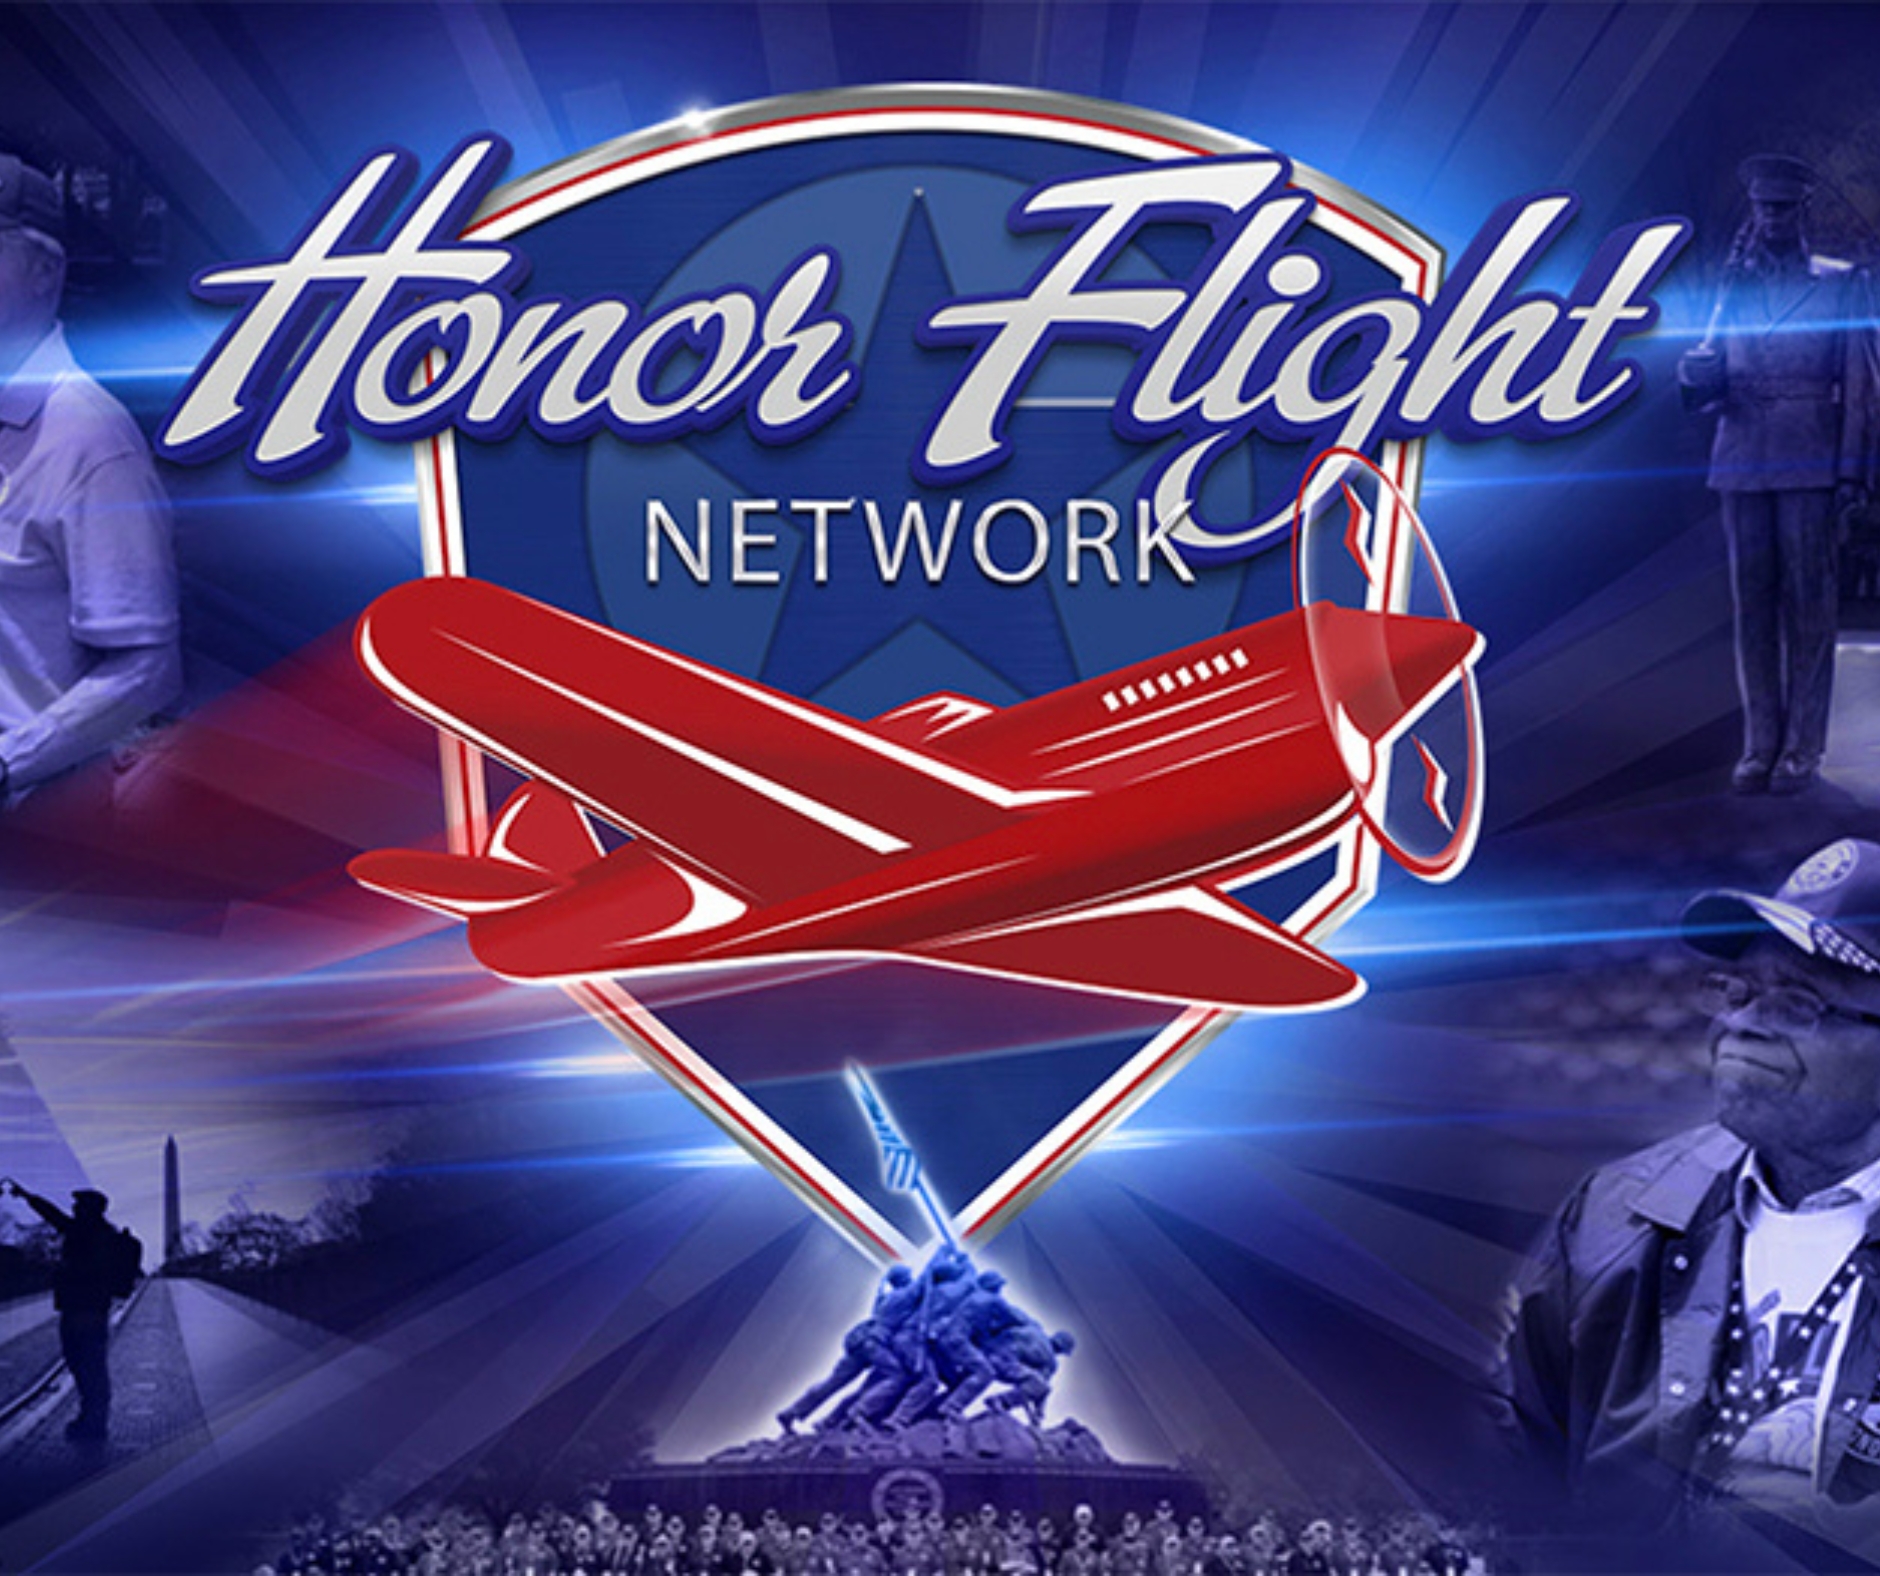 Honor-Flight-Network